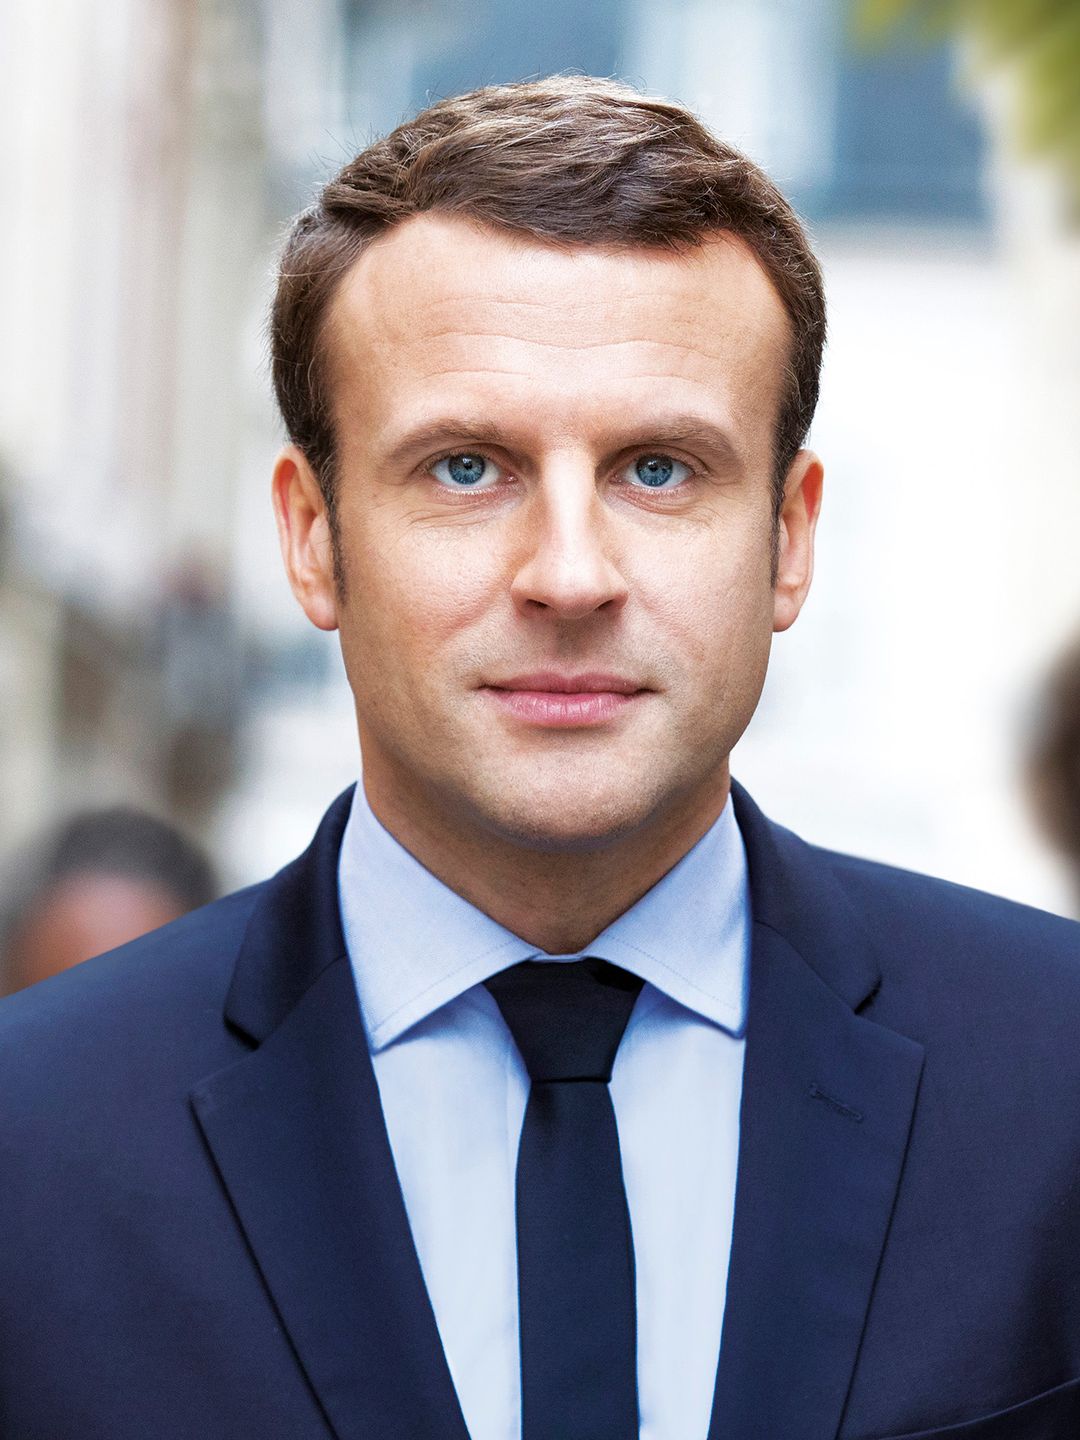 Emmanuel Macron teenage years